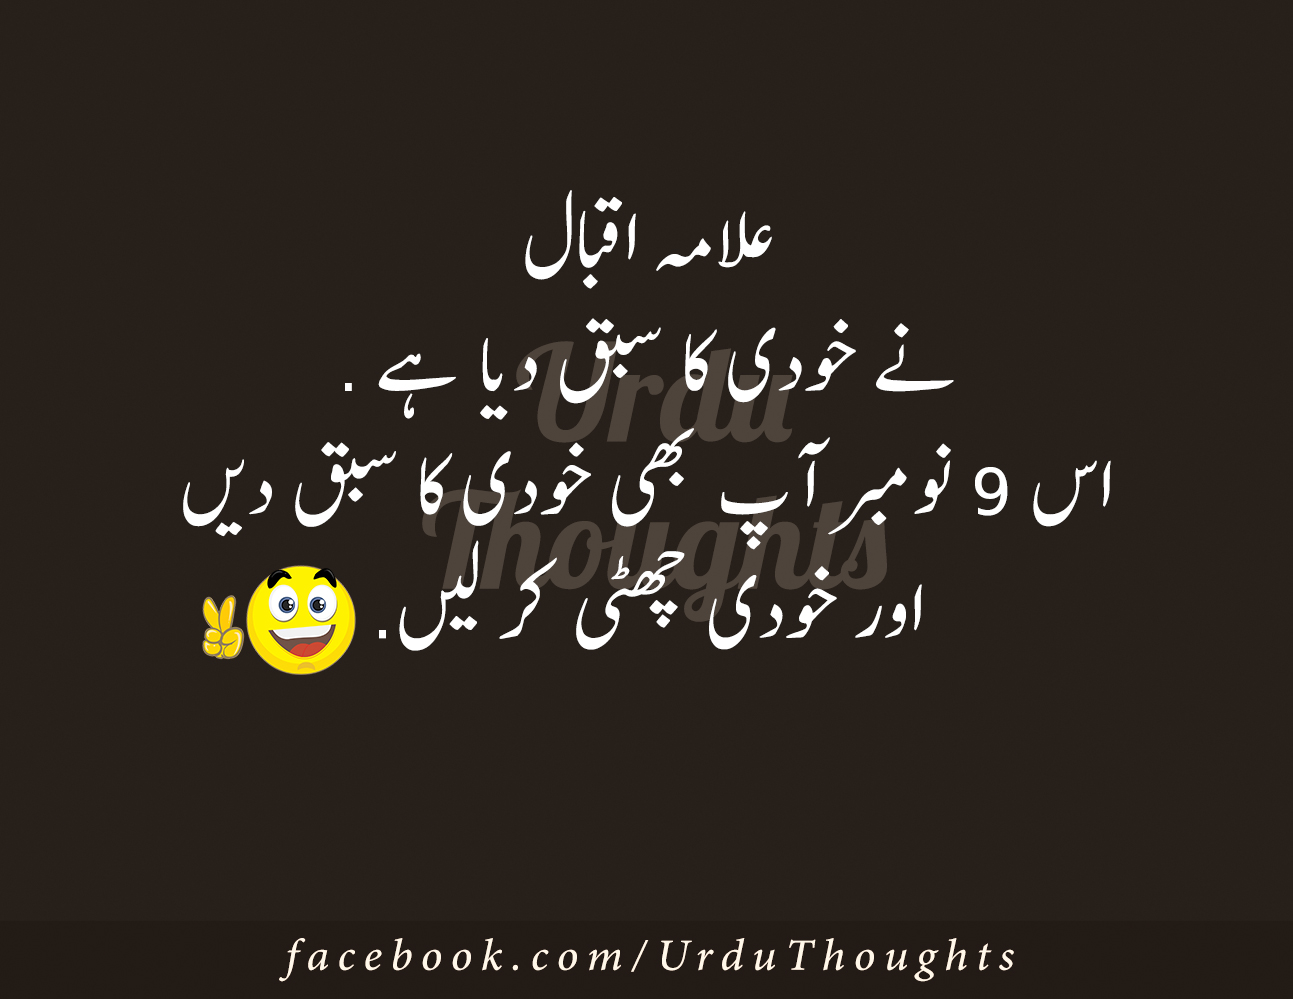  Funny  Images Photos Urdu  Jokes Images Urdu  Thoughts